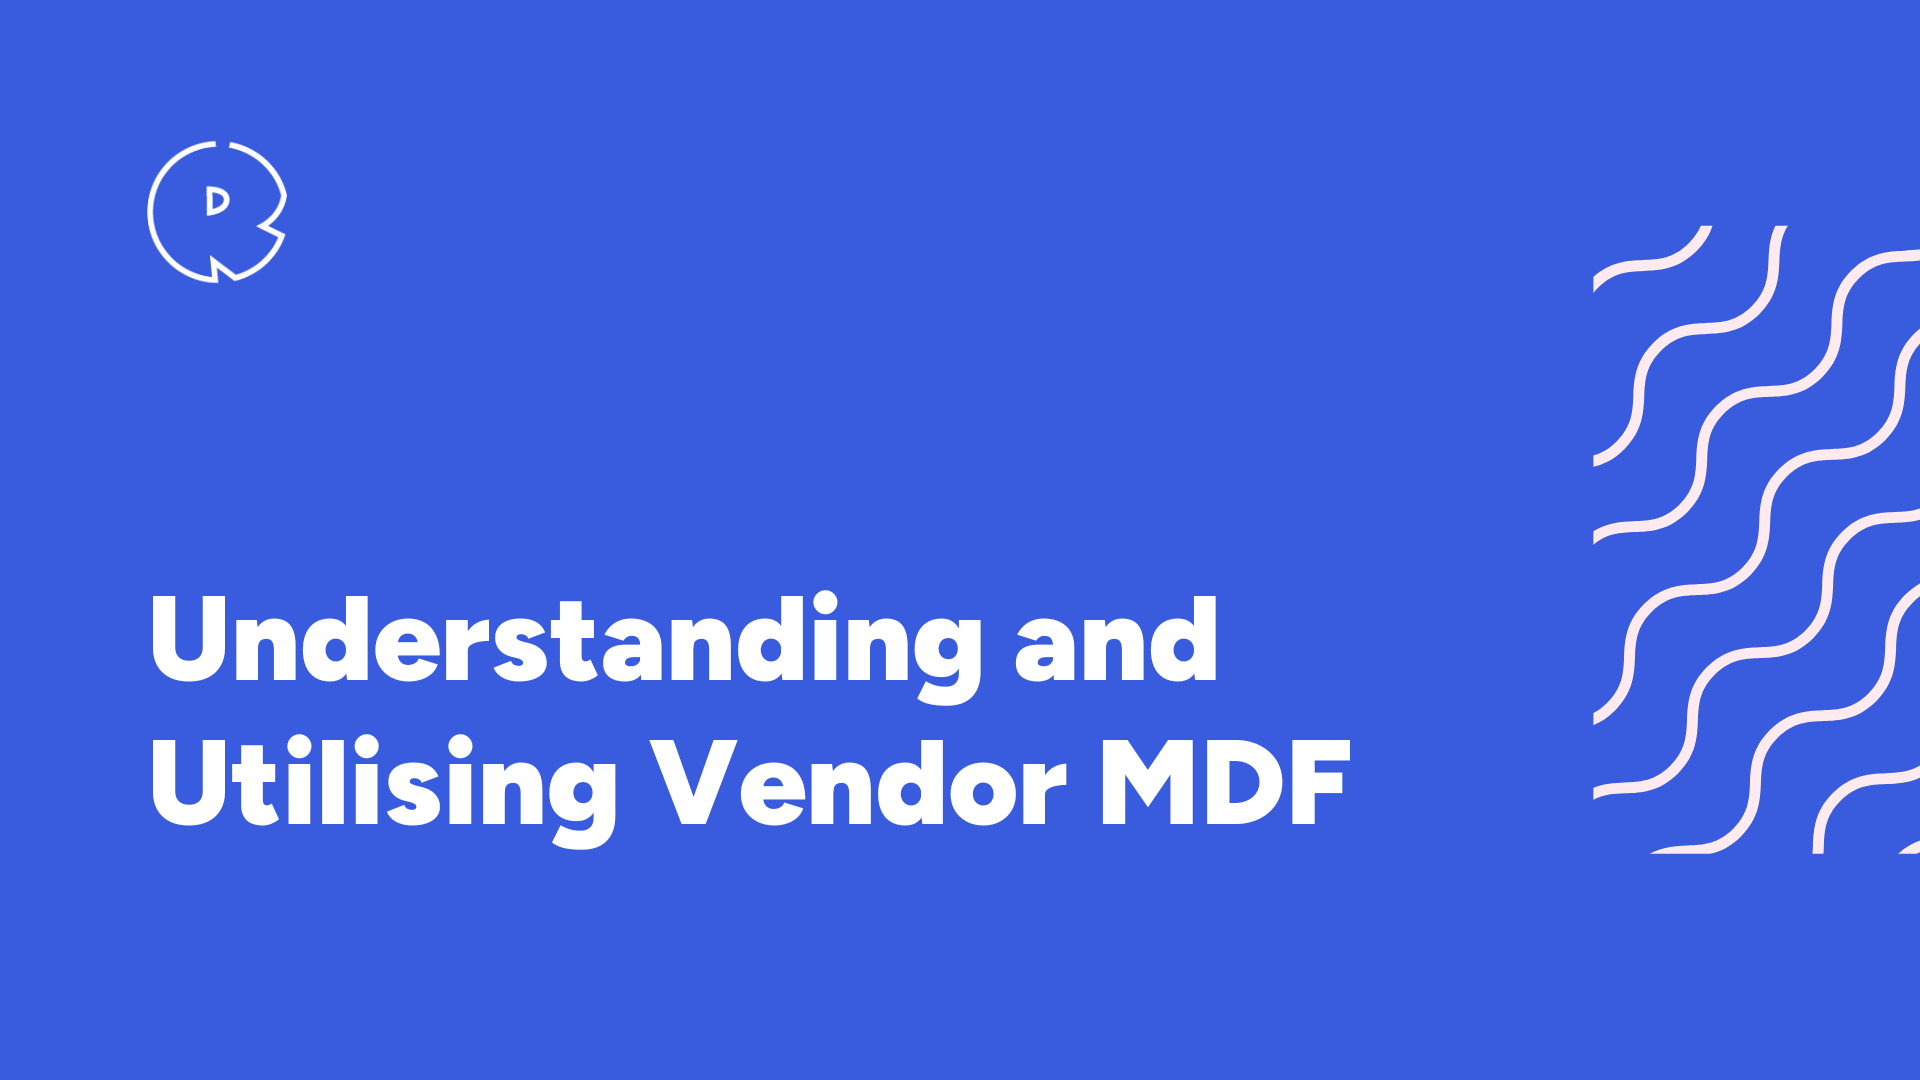 Understanding and Utilising Vendor MDF (Marketing Development Funds)